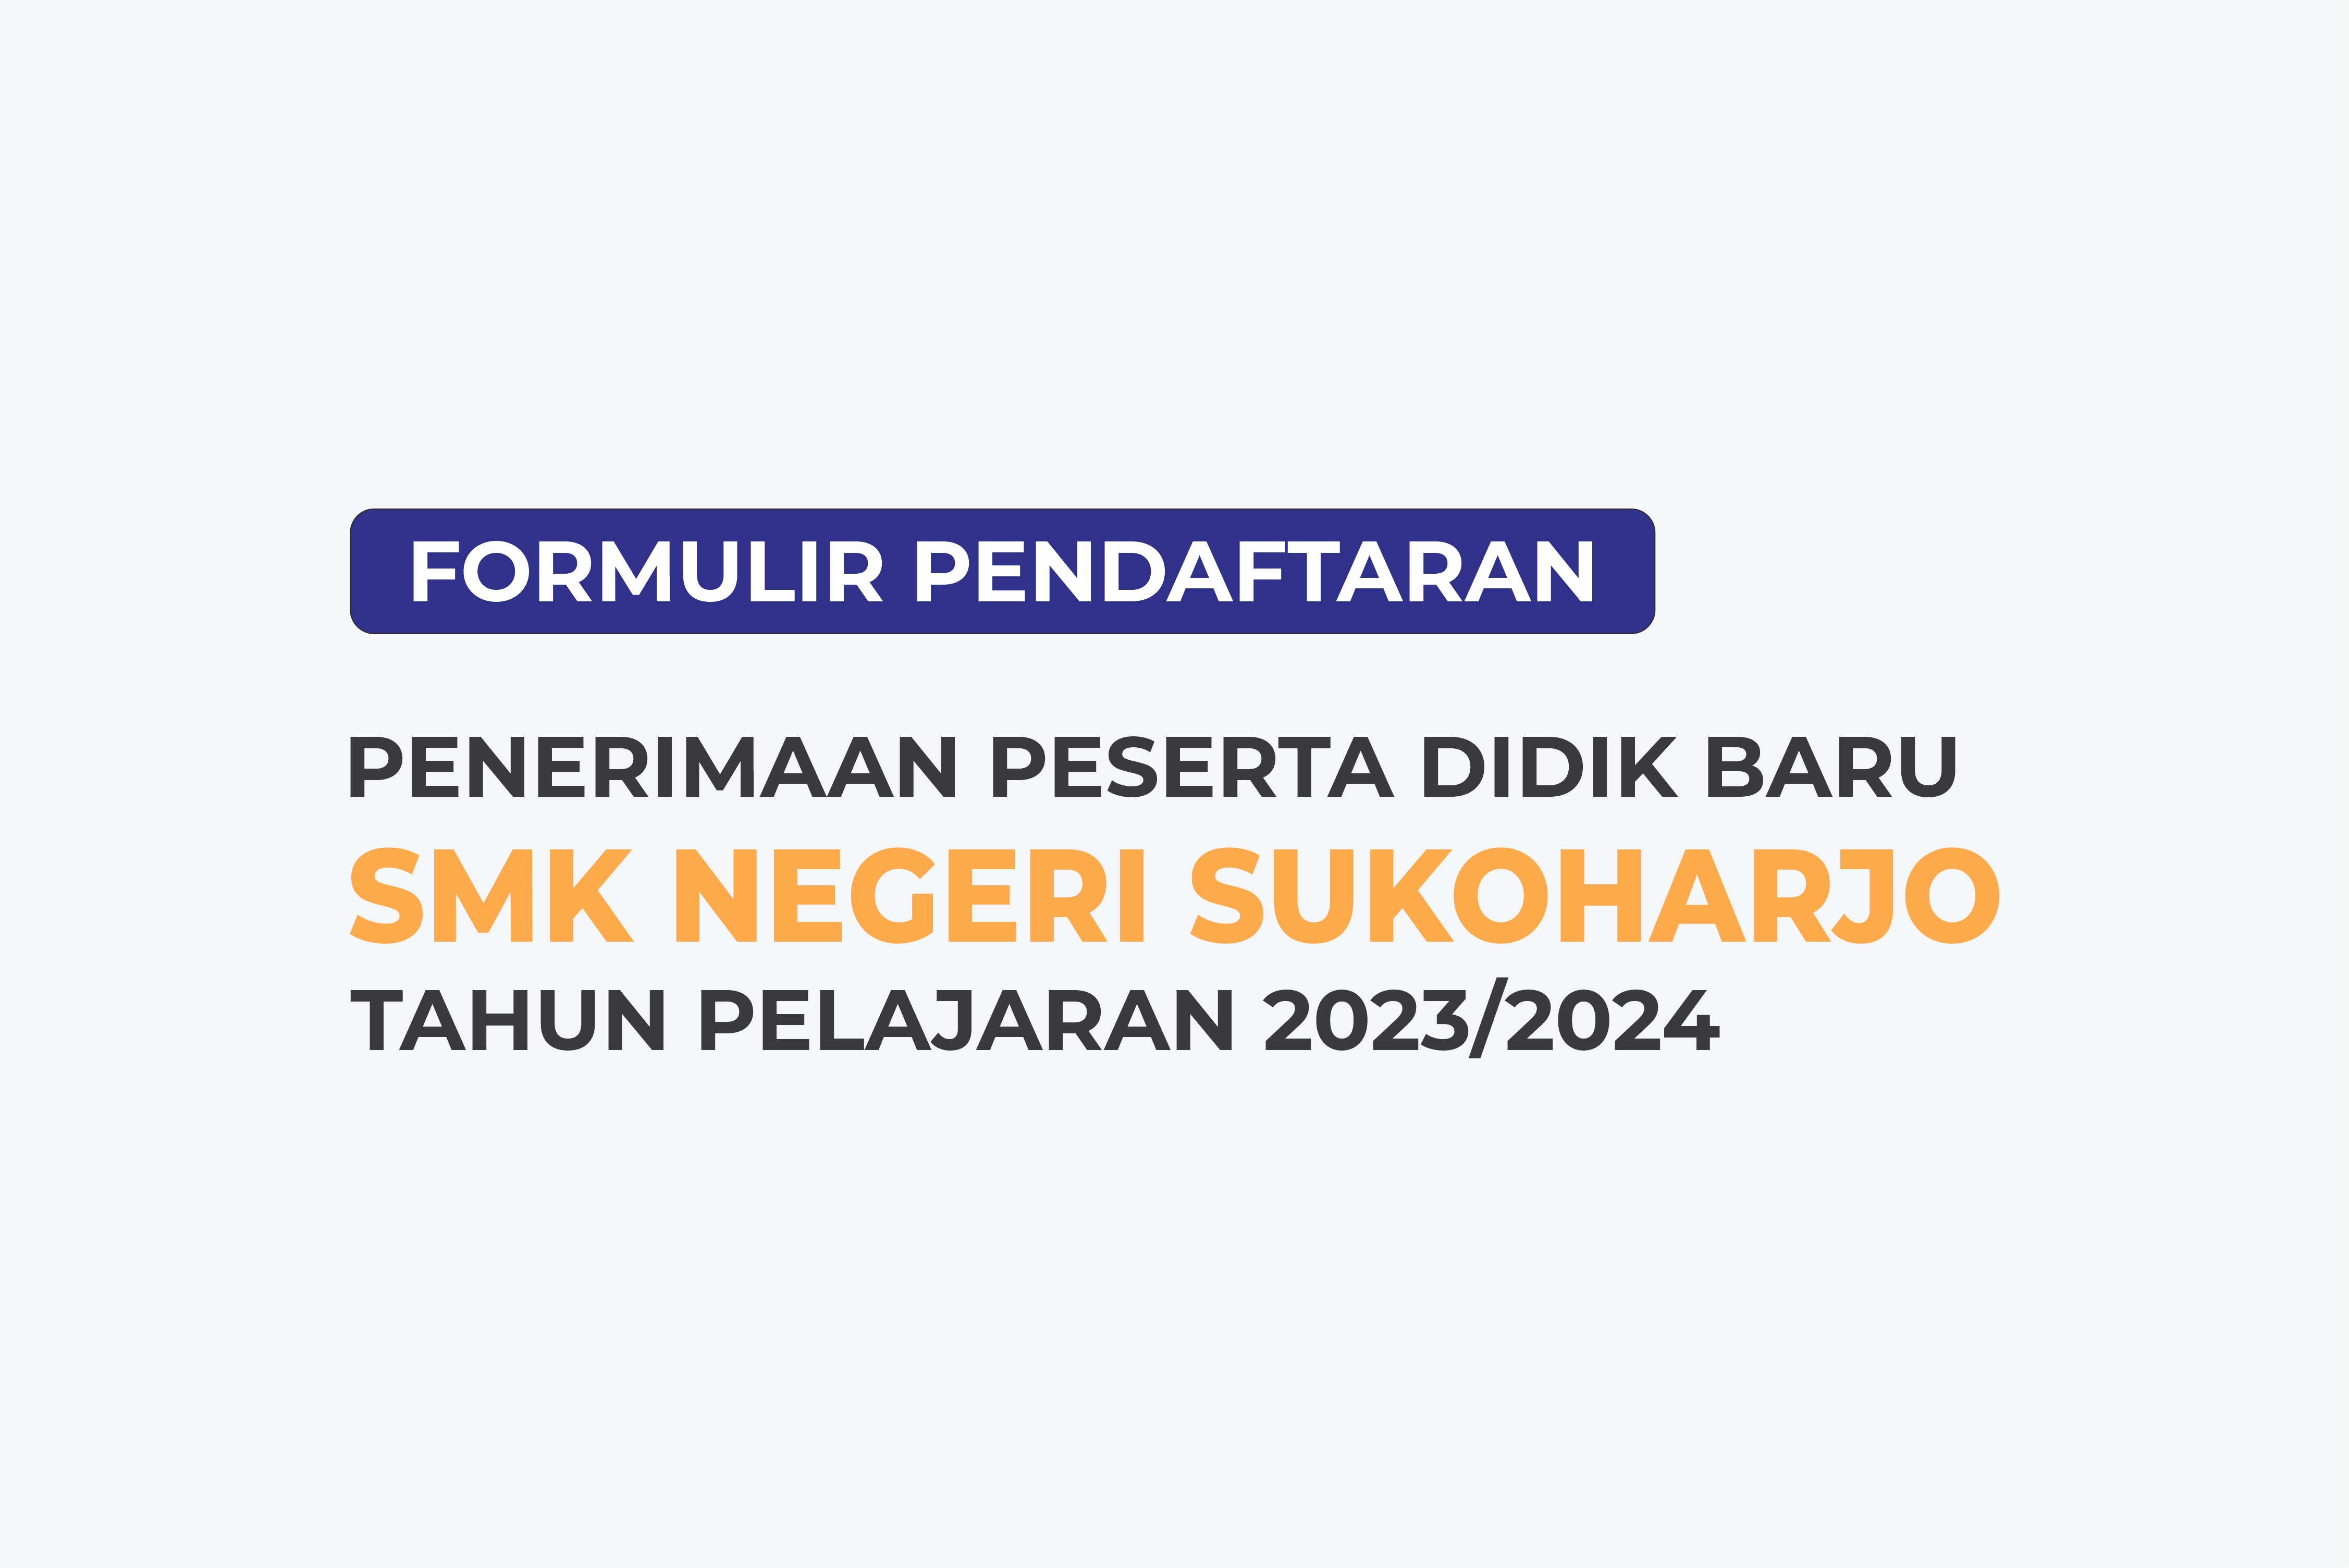 Formulir Pendaftaran - PPDB SMK Negeri Sukoharjo Tahun Pelajaran 2023/2024